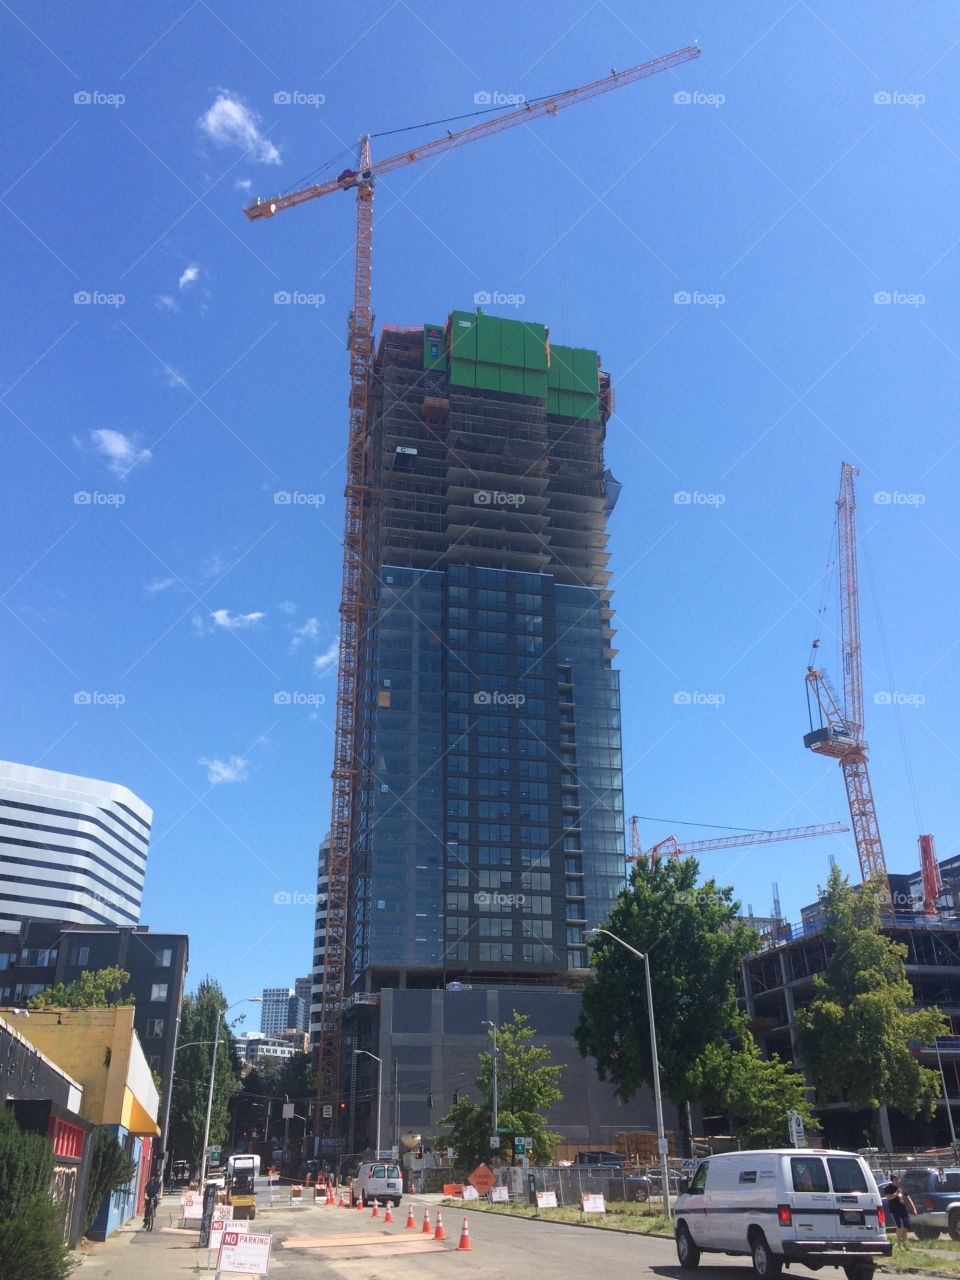 Construction of a skyscraper in Seattle